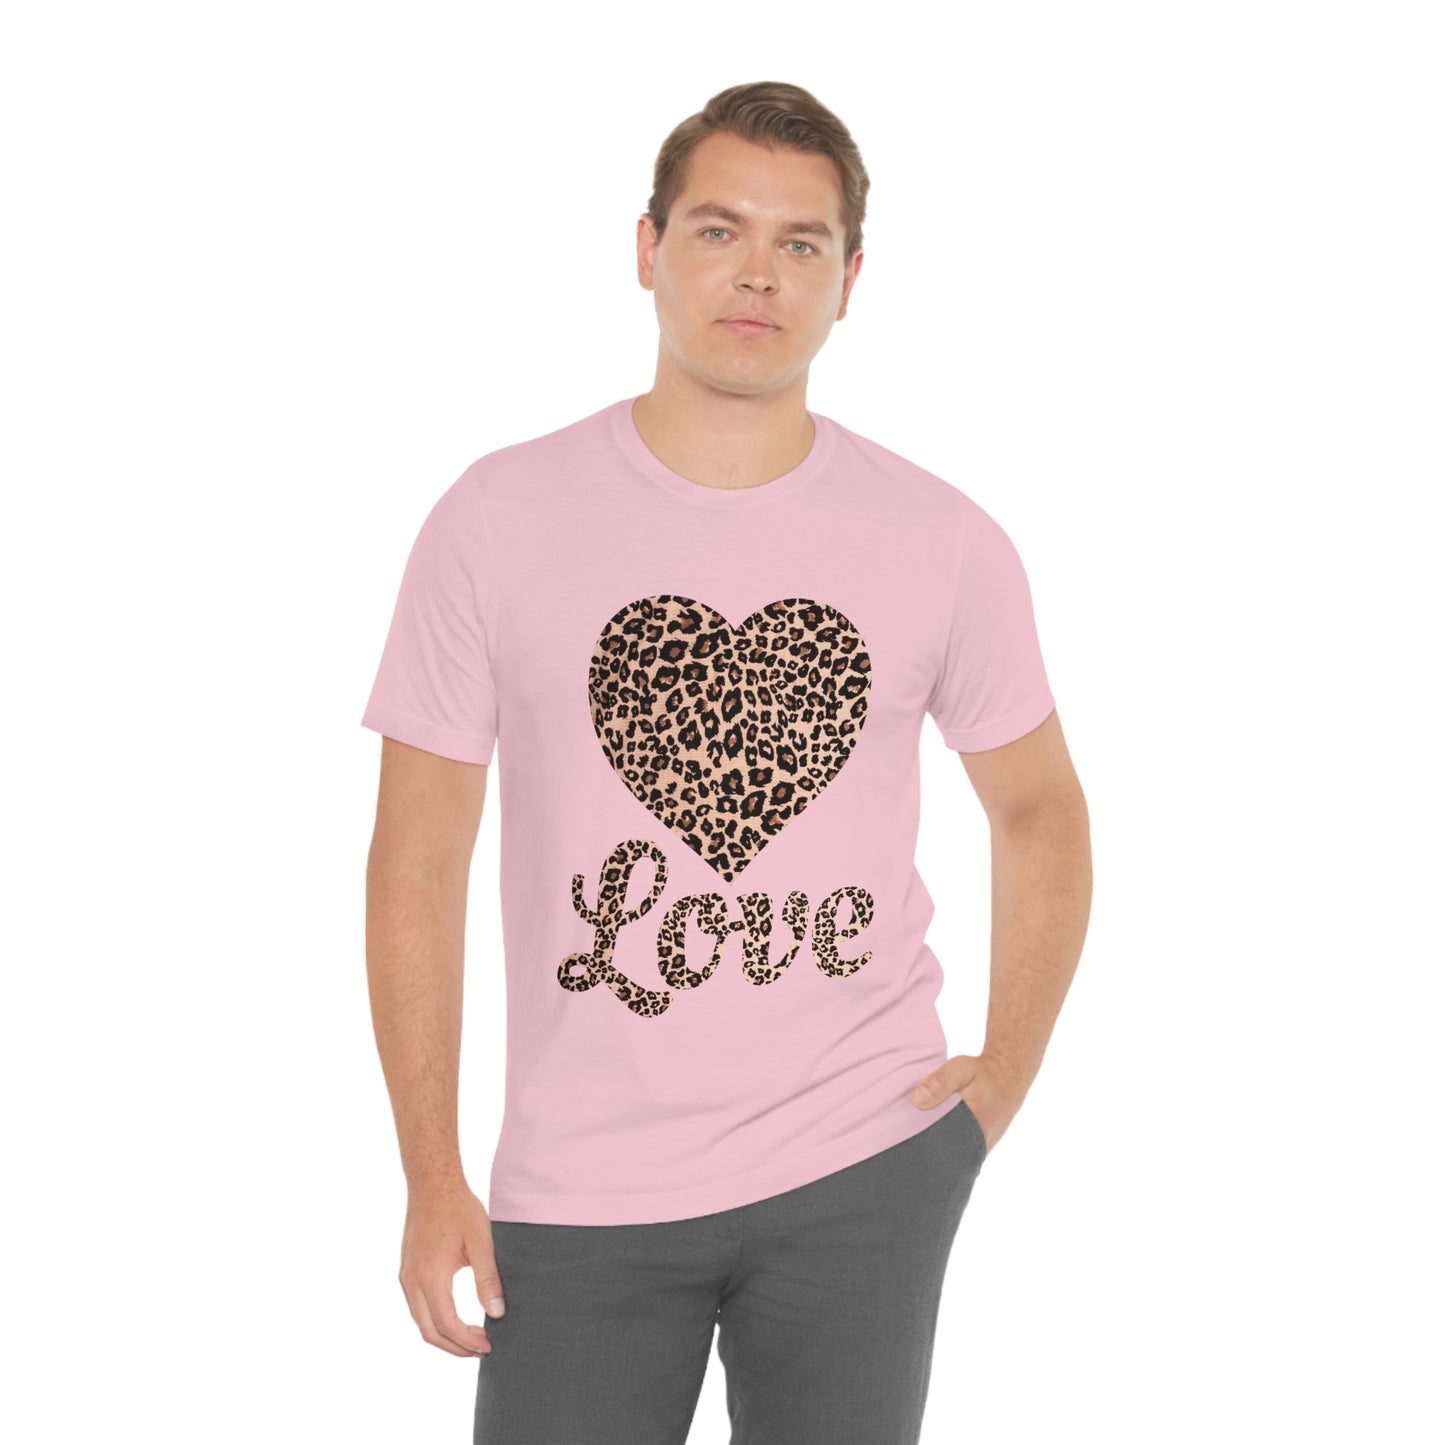 Leopard Print, Love Heart Tee,